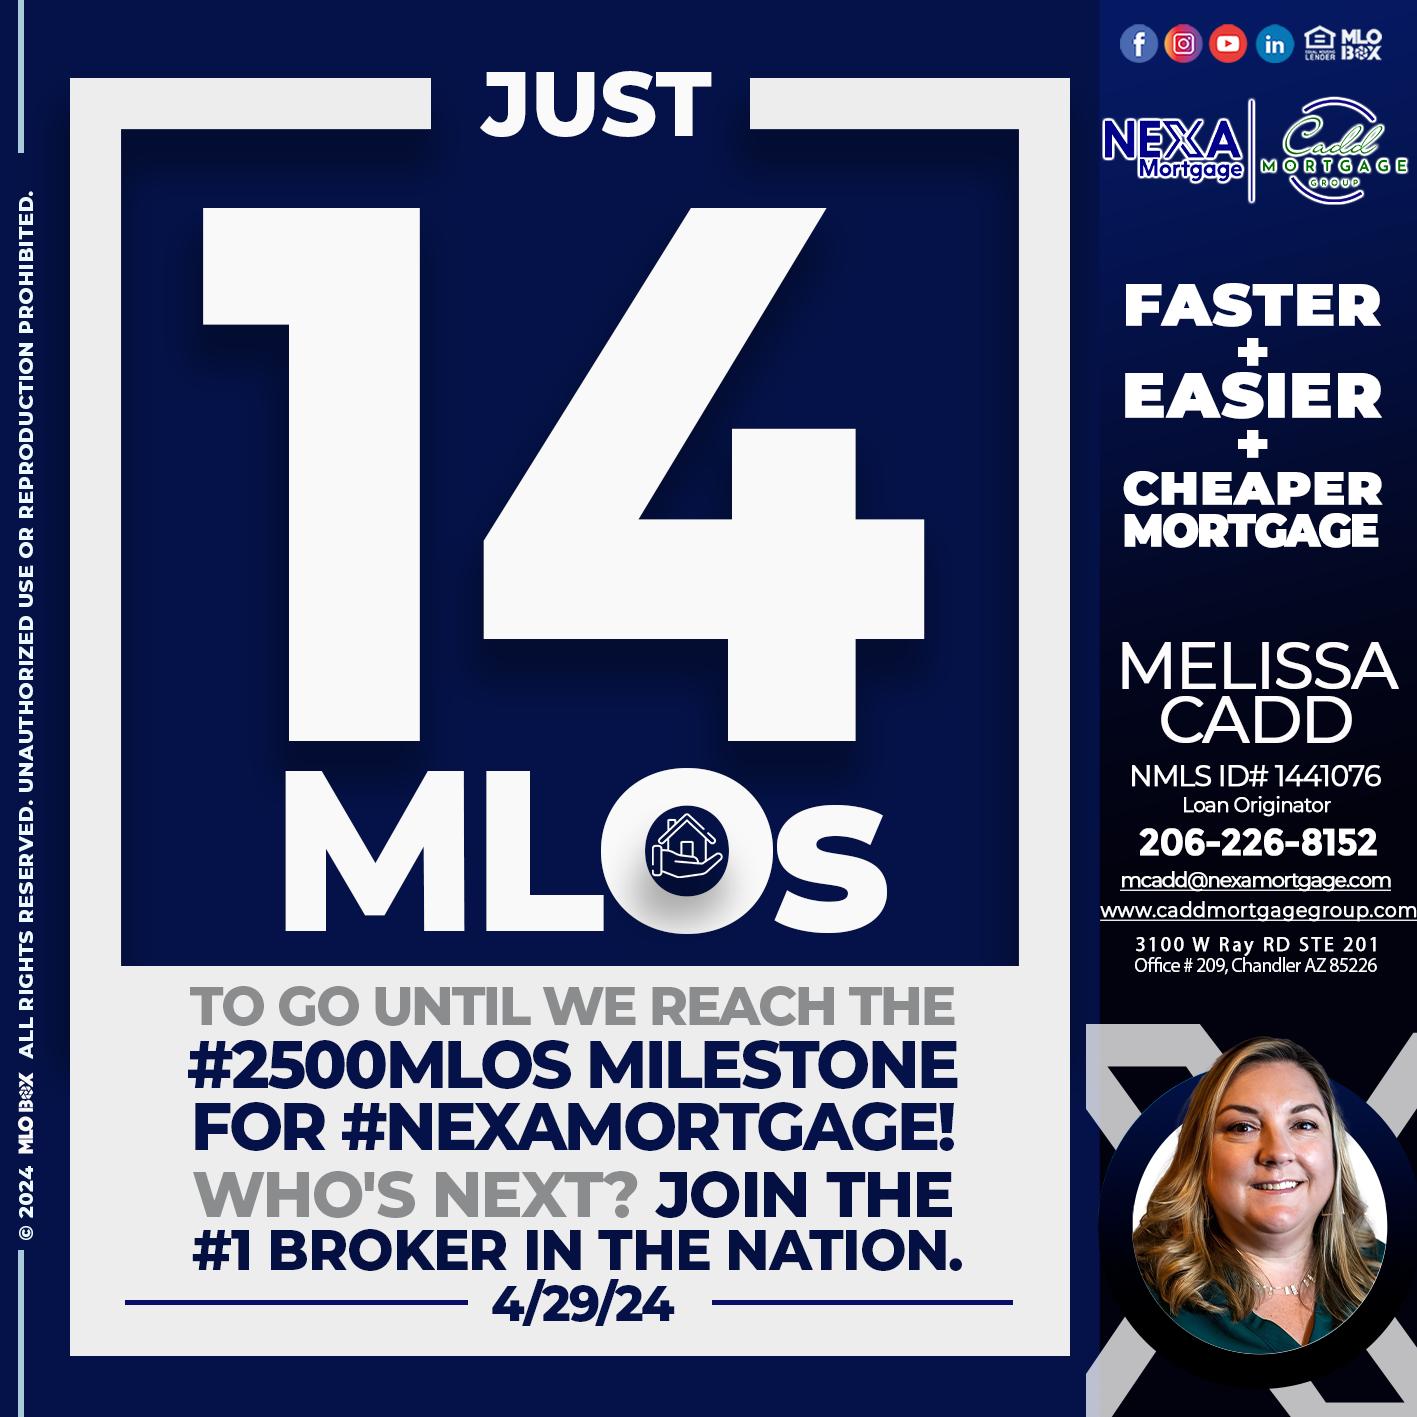 just 14 - Melissa Cadd -Loan Originator